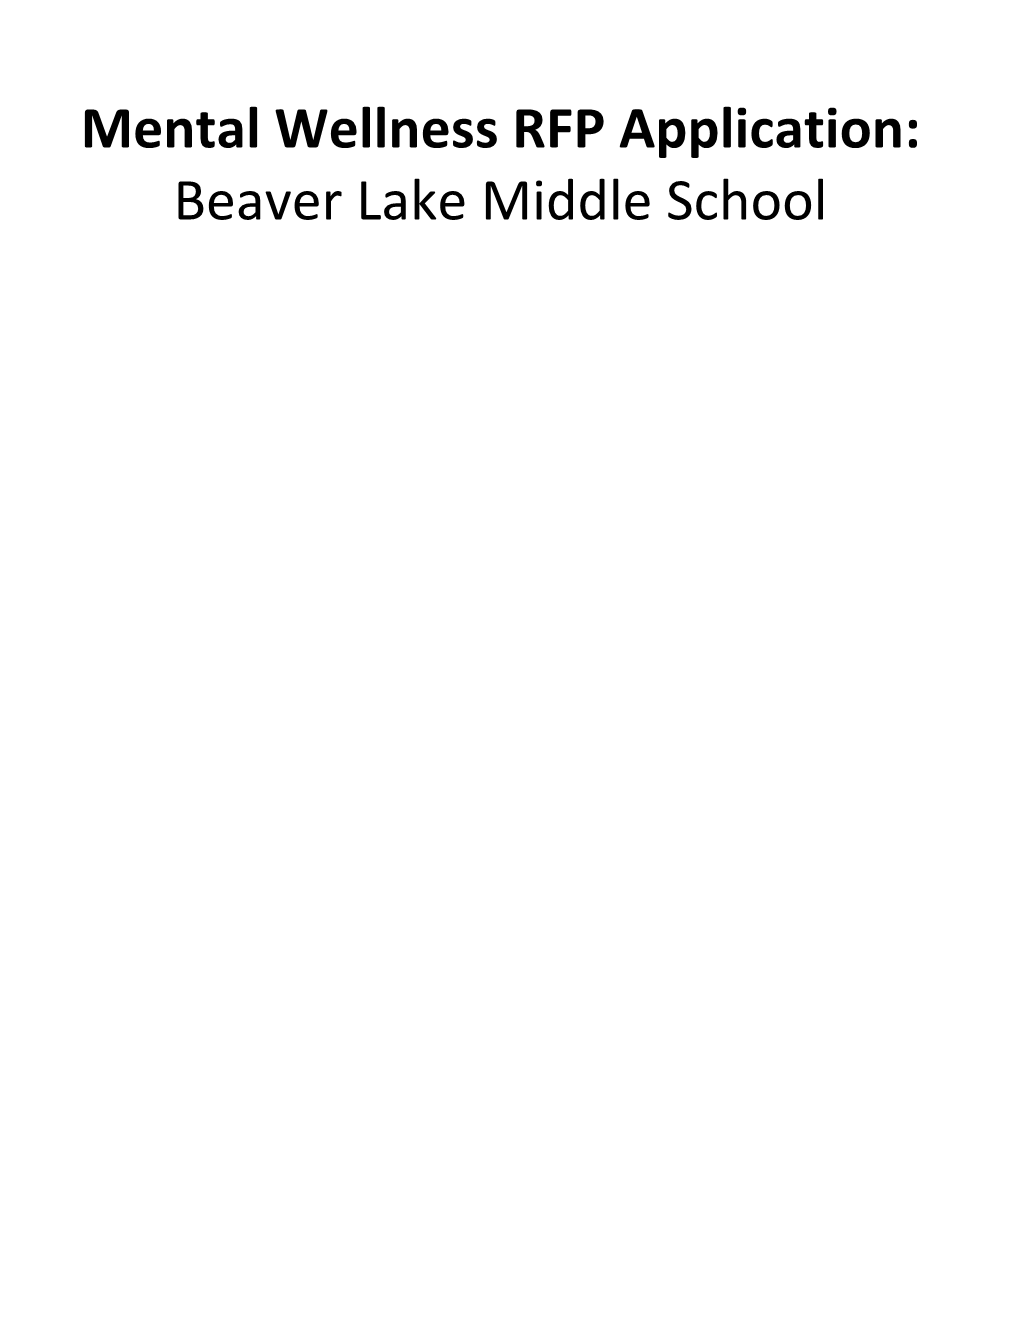 Mental Wellness RFP Application: Beaver Lake Middle School Beaver Lake Middle School 2019-2020 City of Sammamish – Youth Mental Wellness Grant